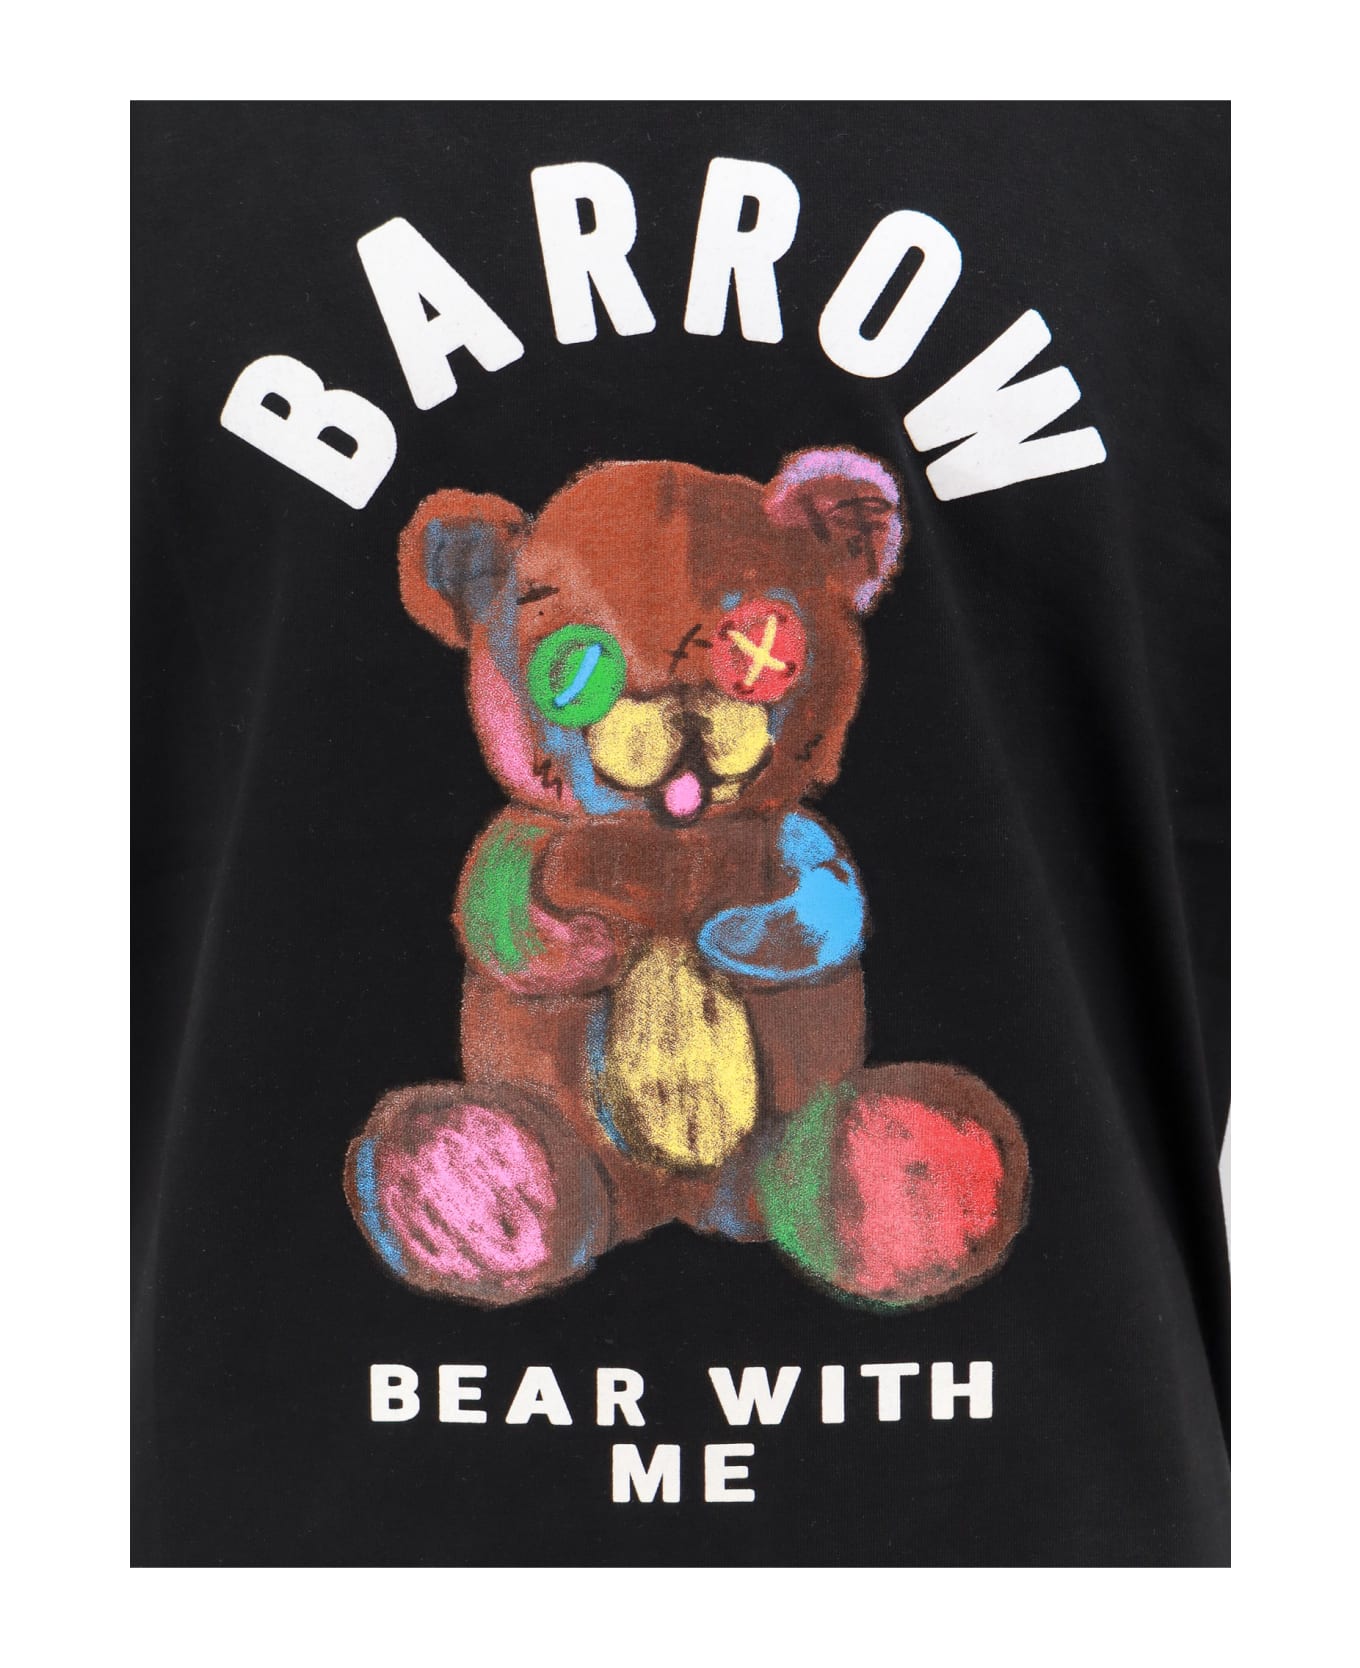 Barrow T-shirt - Black